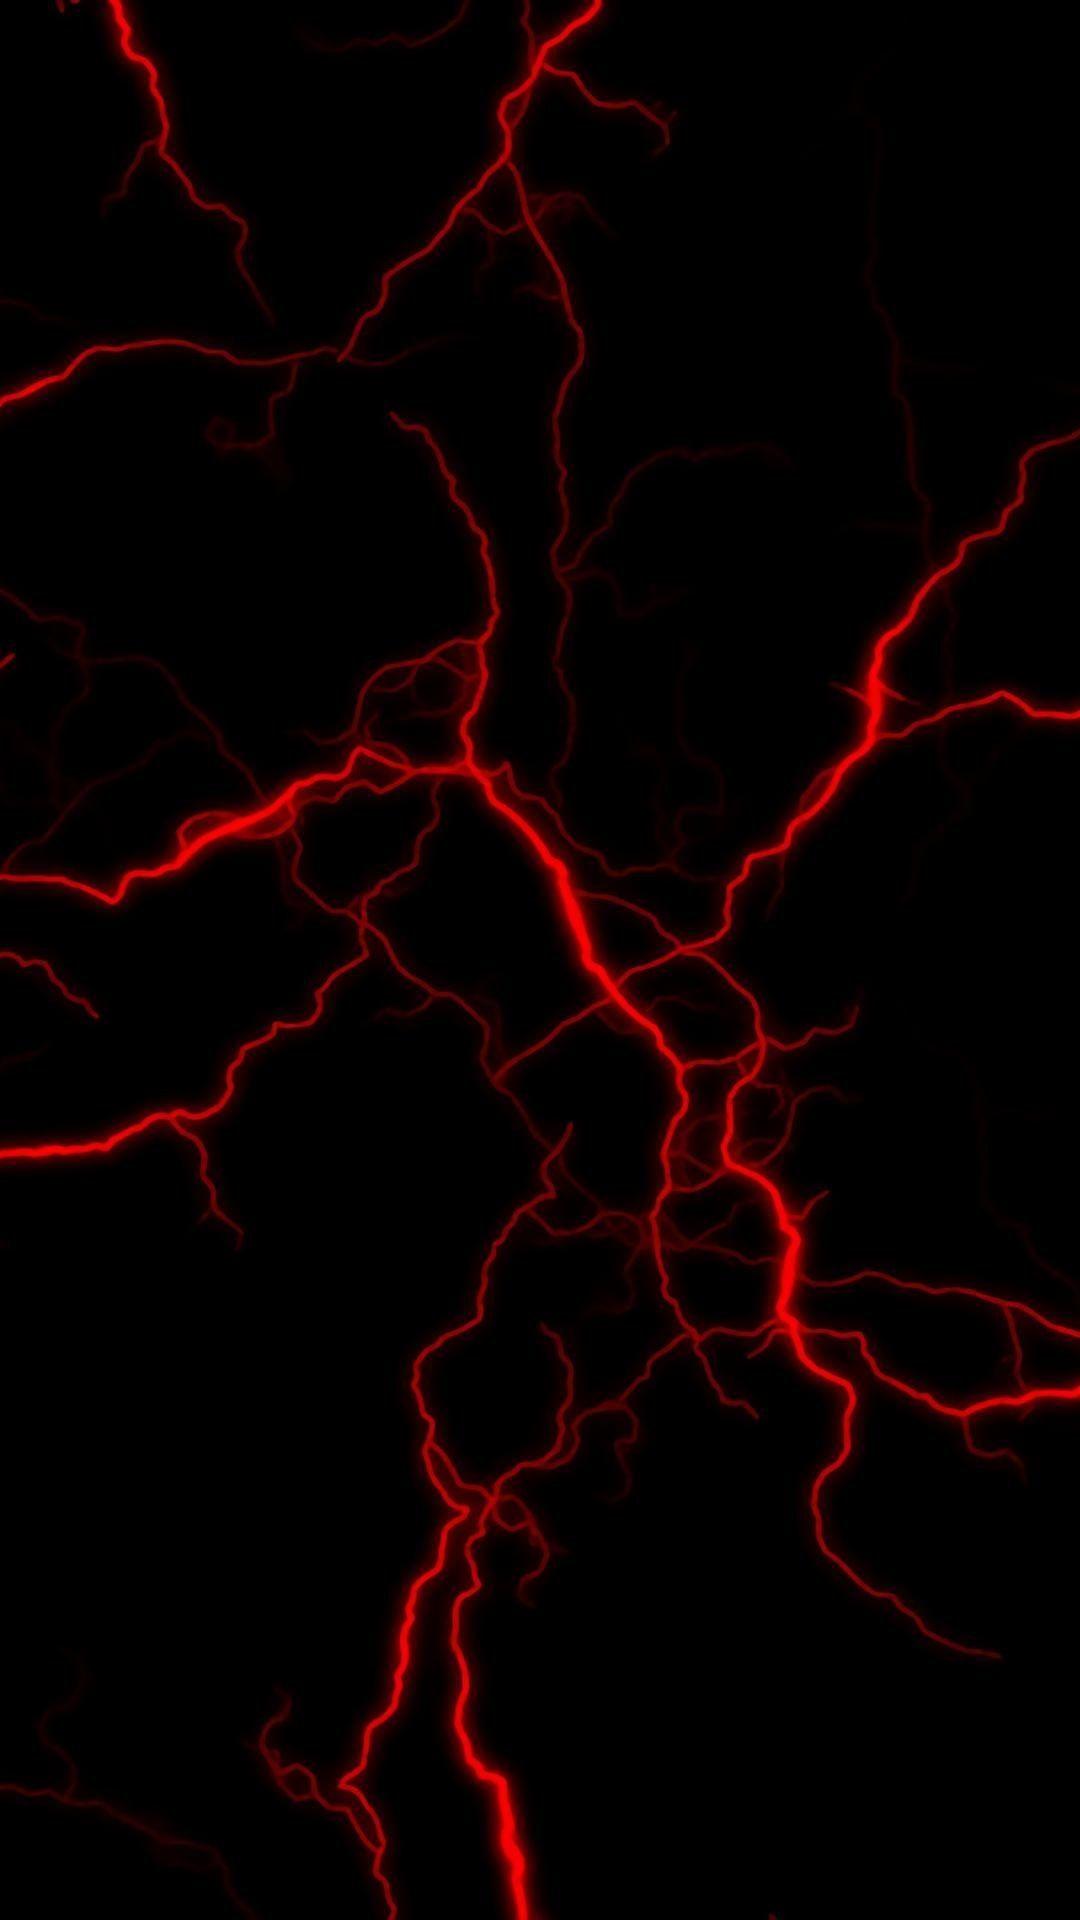 Lightning Bolt Wallpaper 62 images